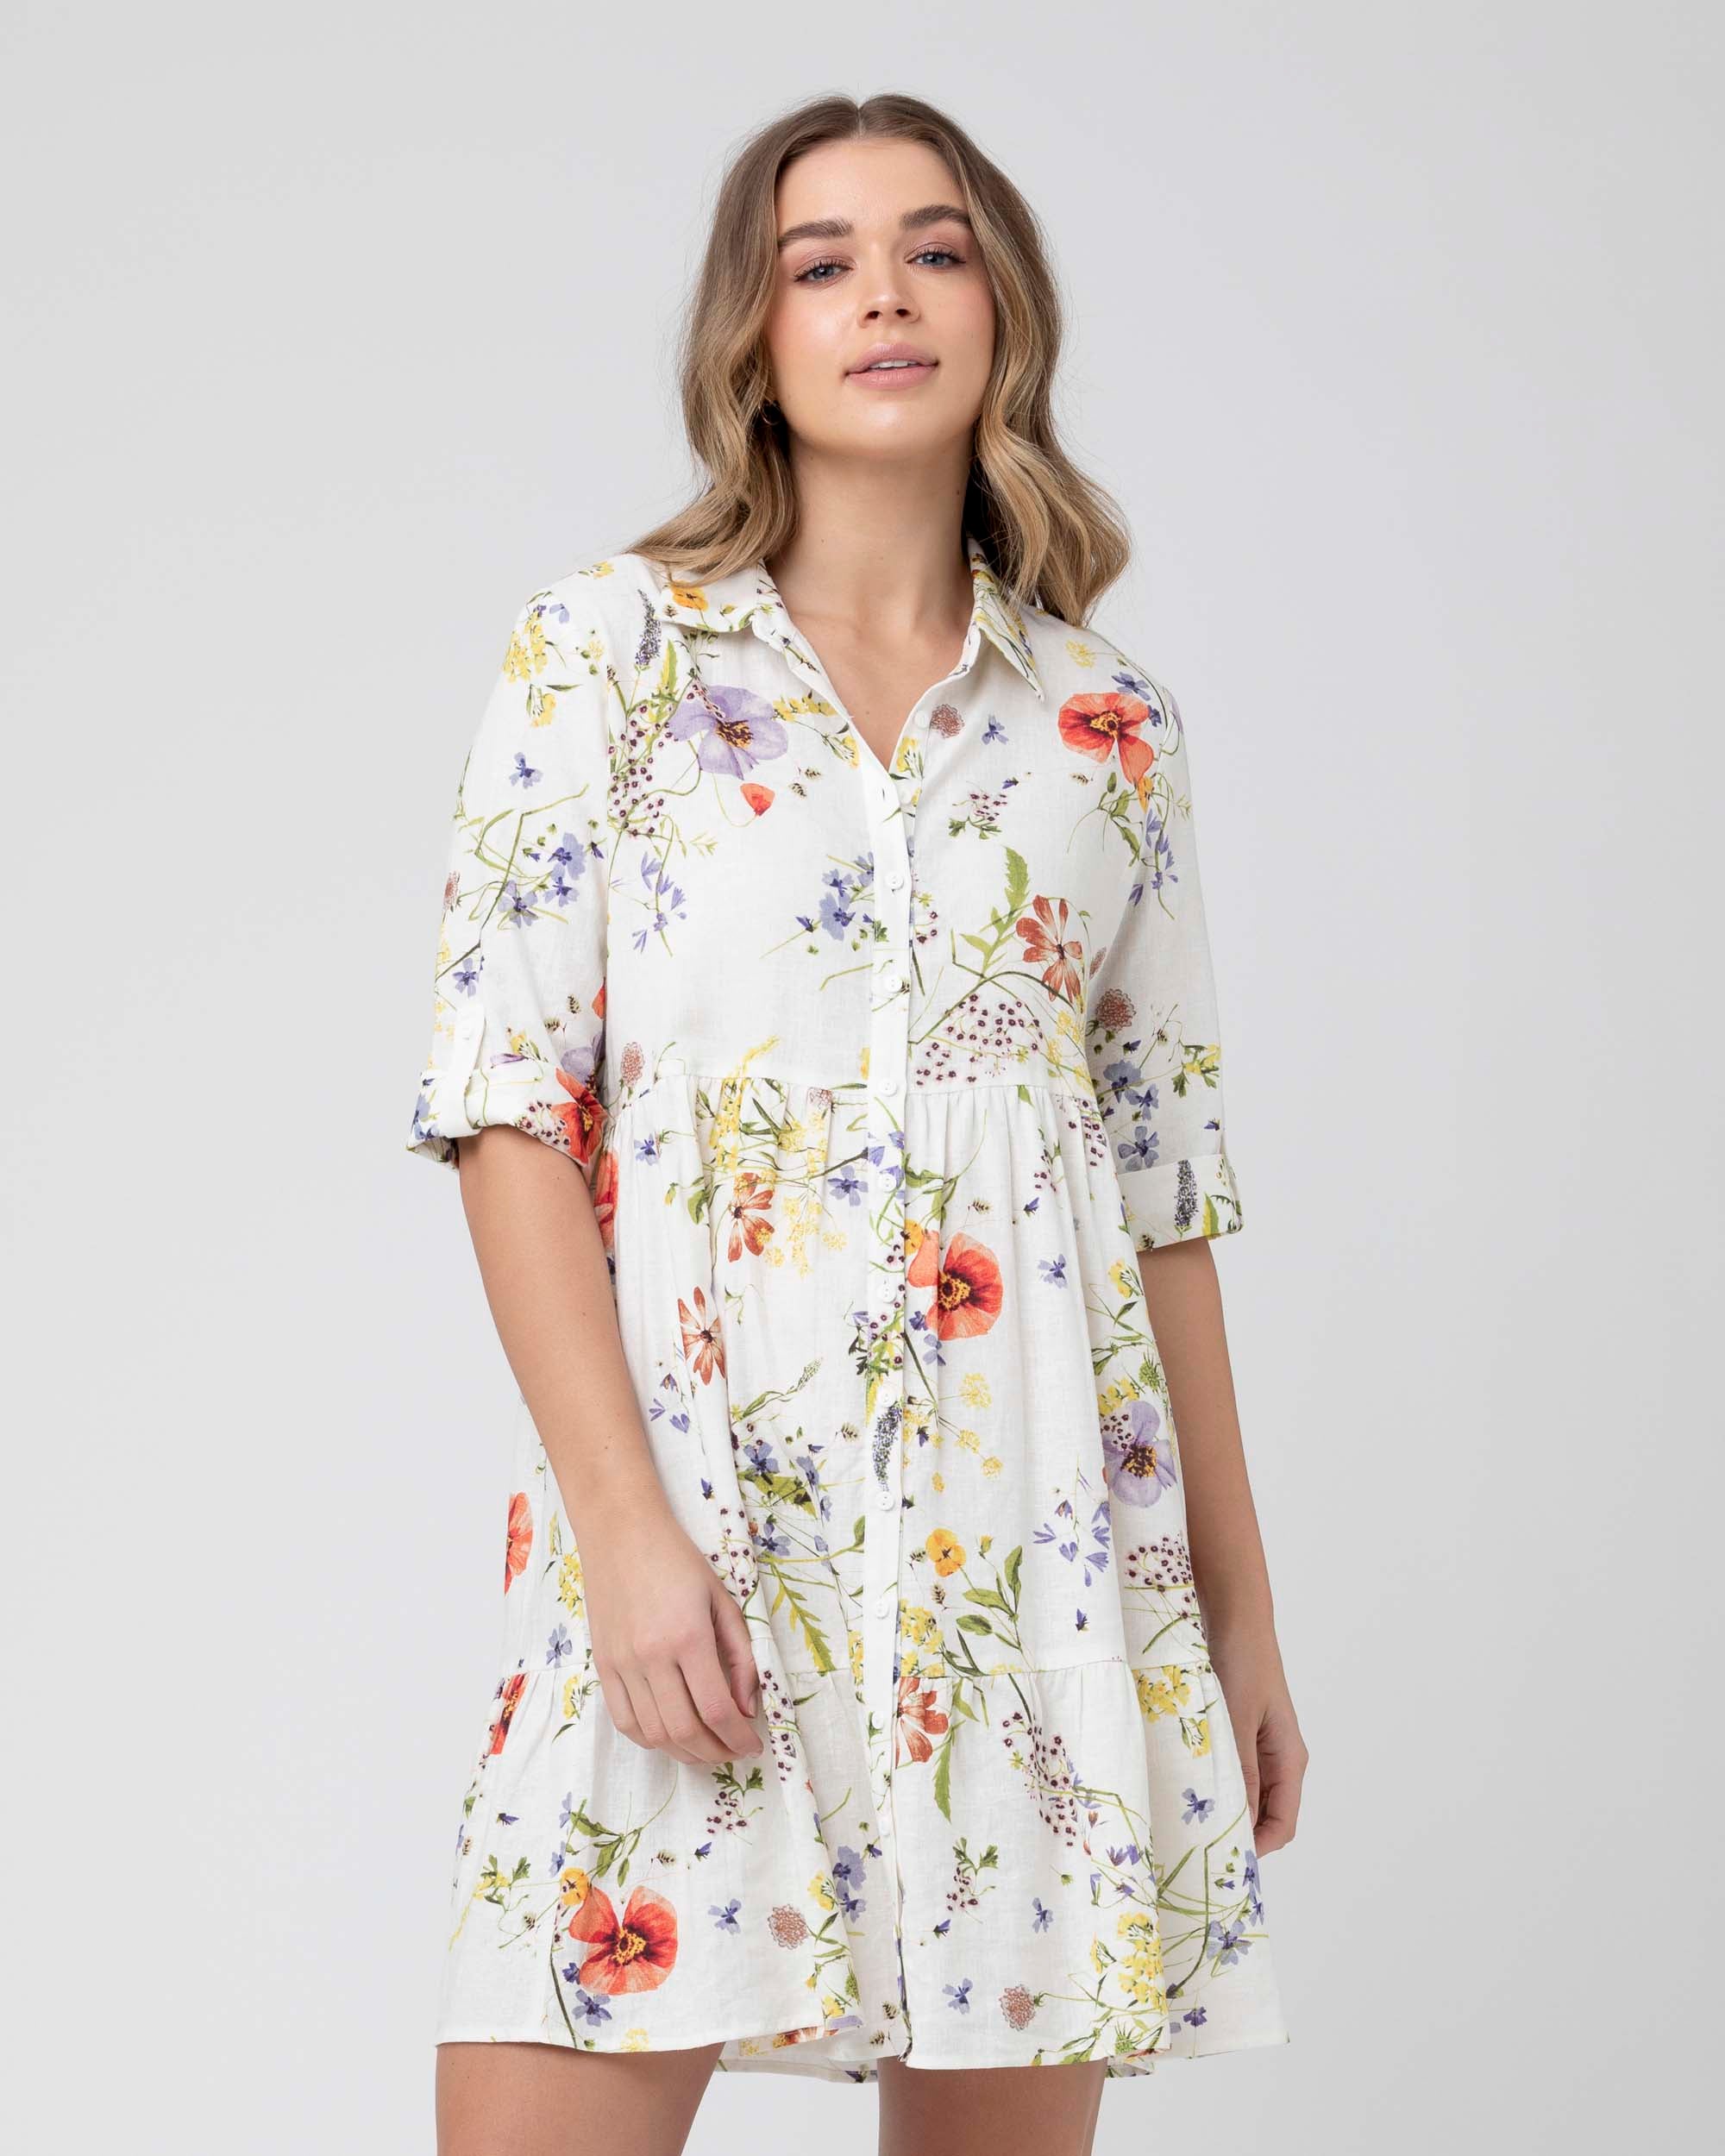 Ripe Maternity 'Bloom' Button Through Dress